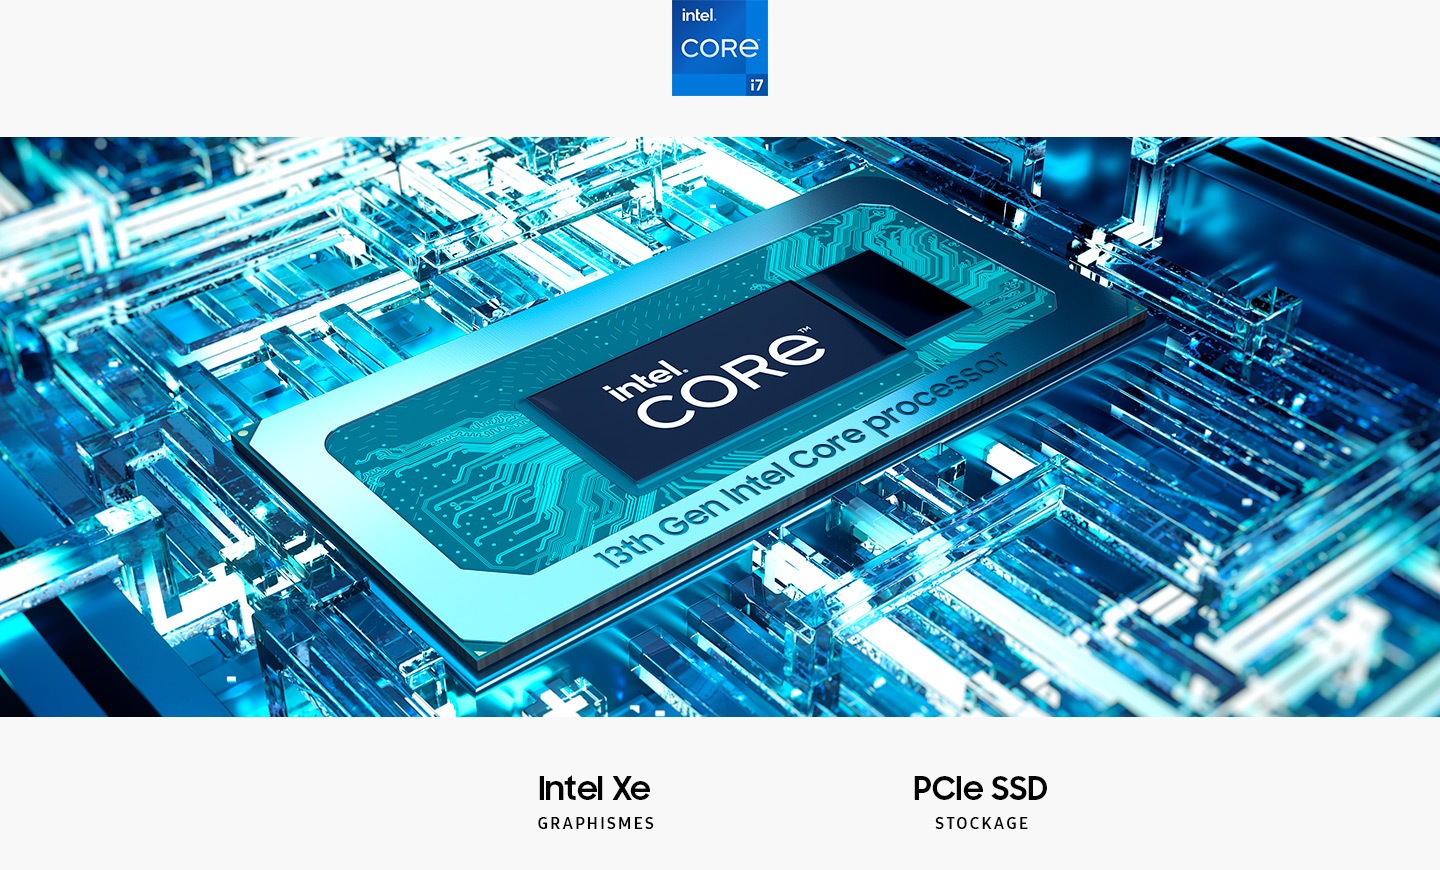 Prosesor Intel® Core ™ generasi ke -13 ada di motherboard dengan teks Intel® Core ™ di tengah. Intel XE. Penyimpanan SSD PCIe. Logo Intel Core i7 diwakili